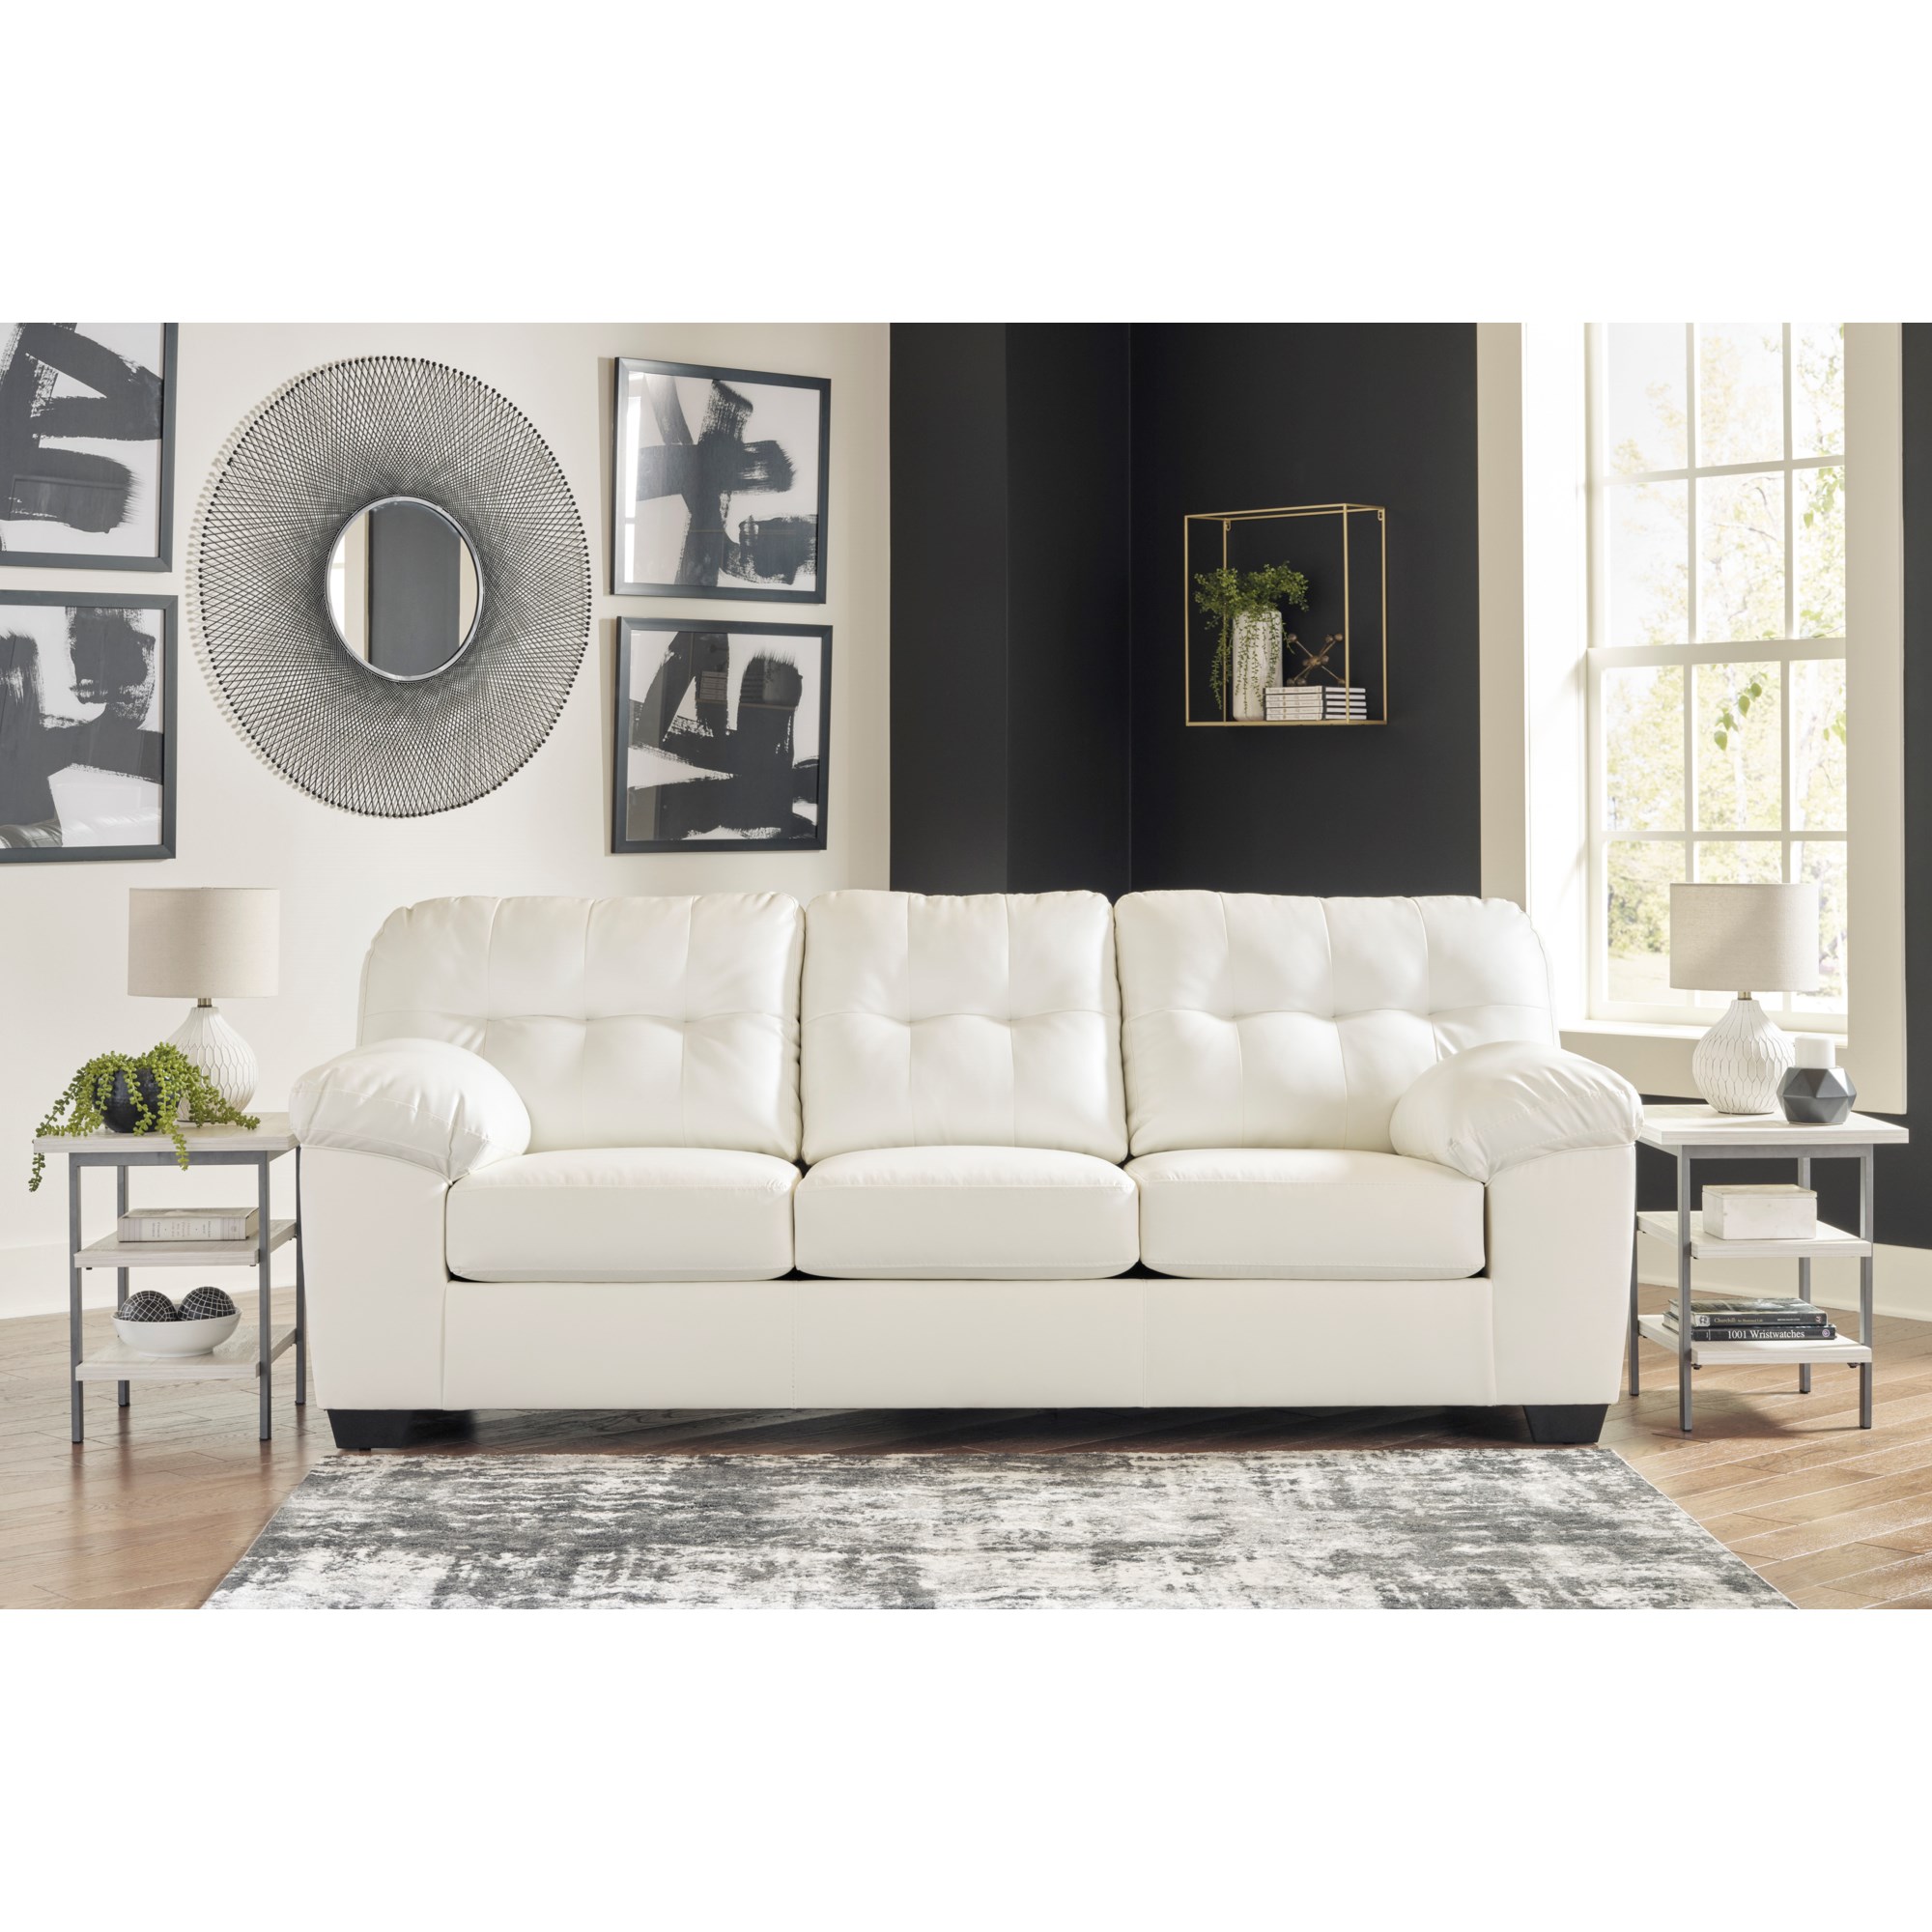 llll.02 single, white & designer furniture